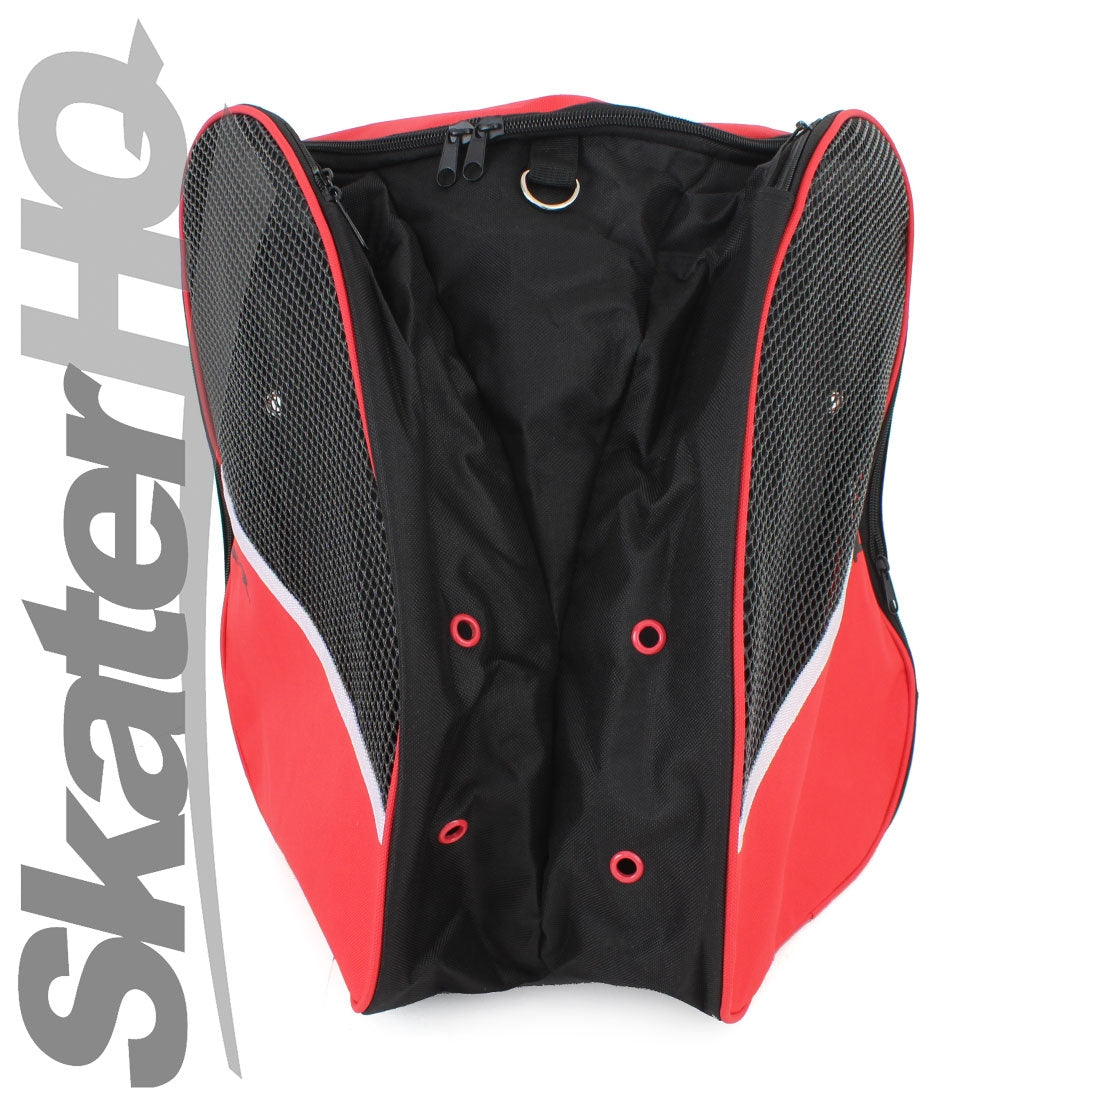 SFR Skate Backpack - Black/Red Bags and Backpacks